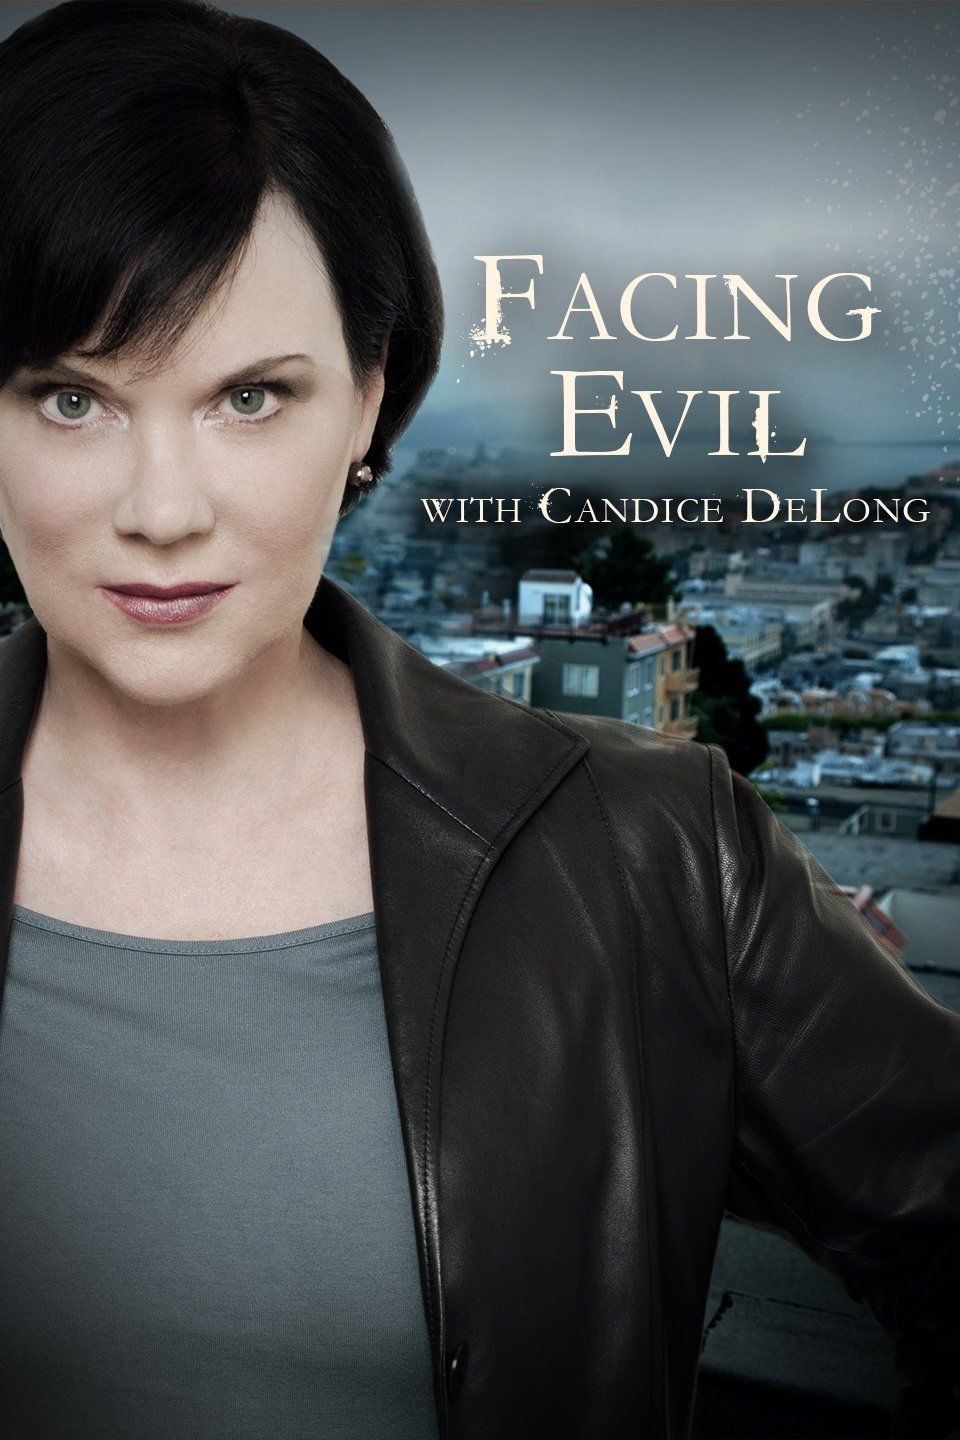 Facing Evil with Candice DeLong ne zaman